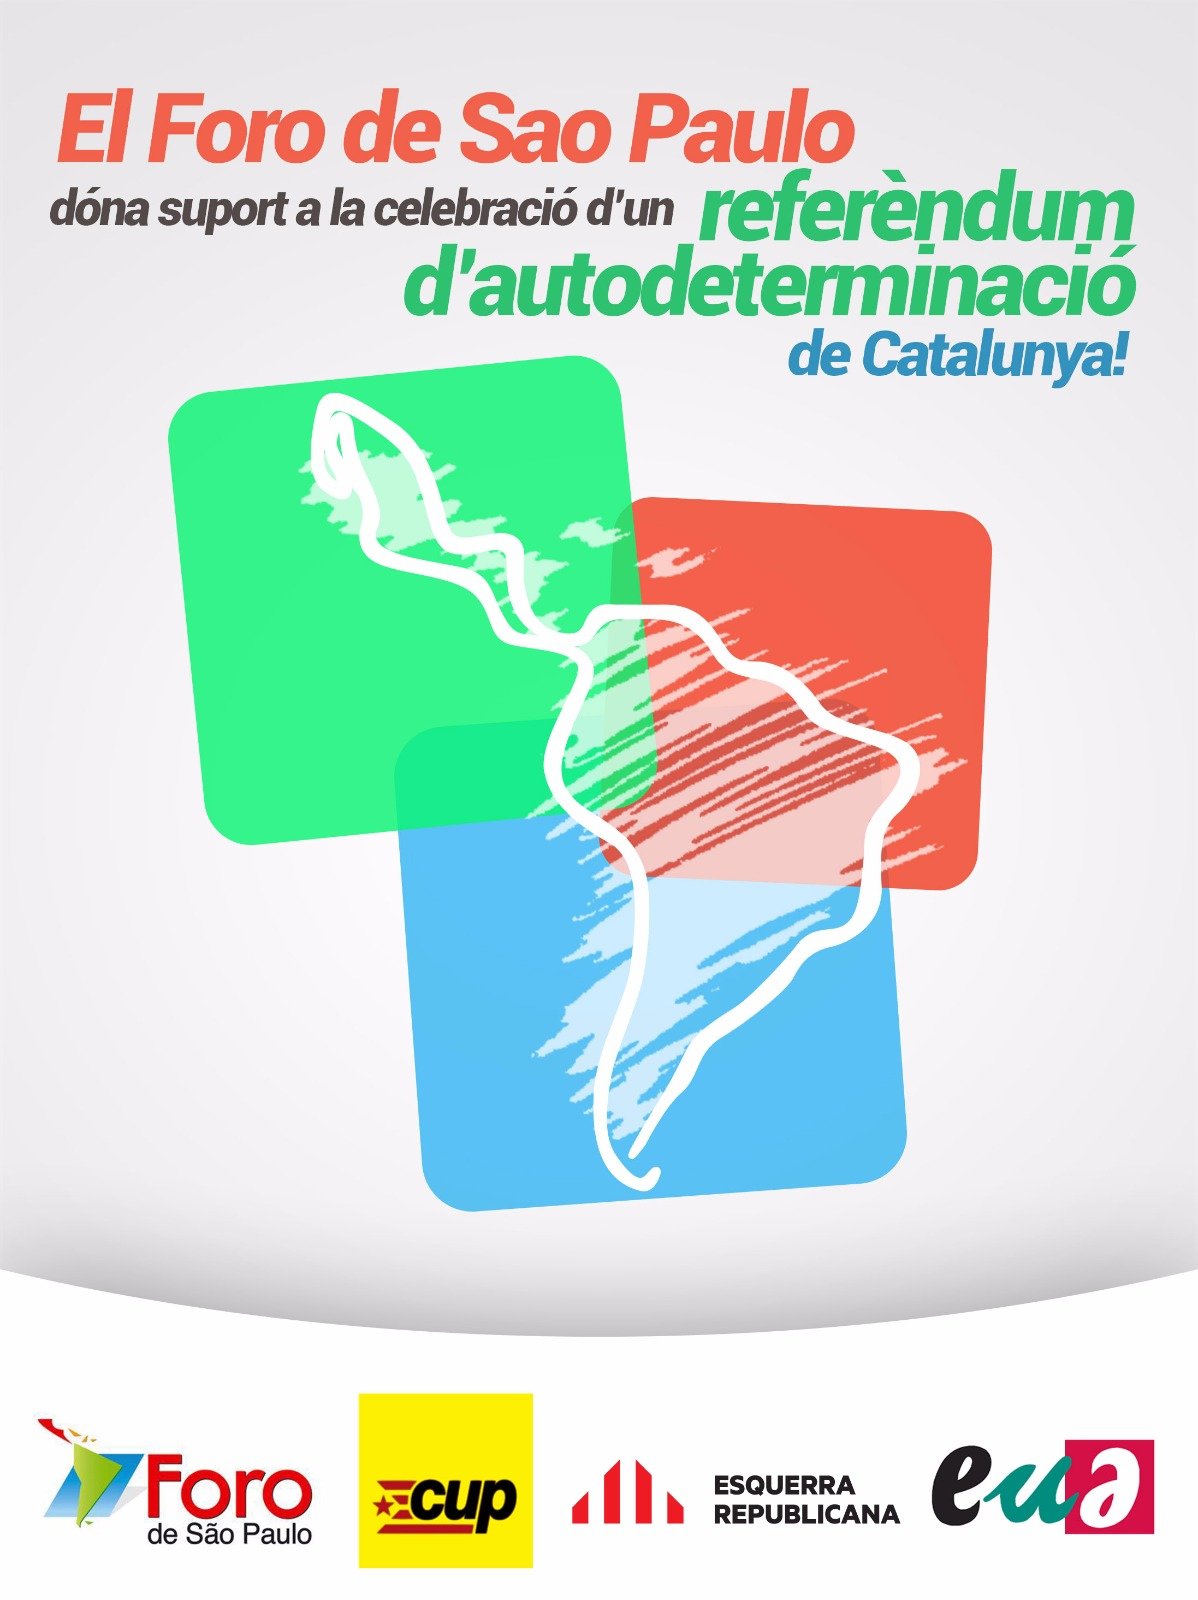 La izquierda latinoamericana, a favor del referéndum